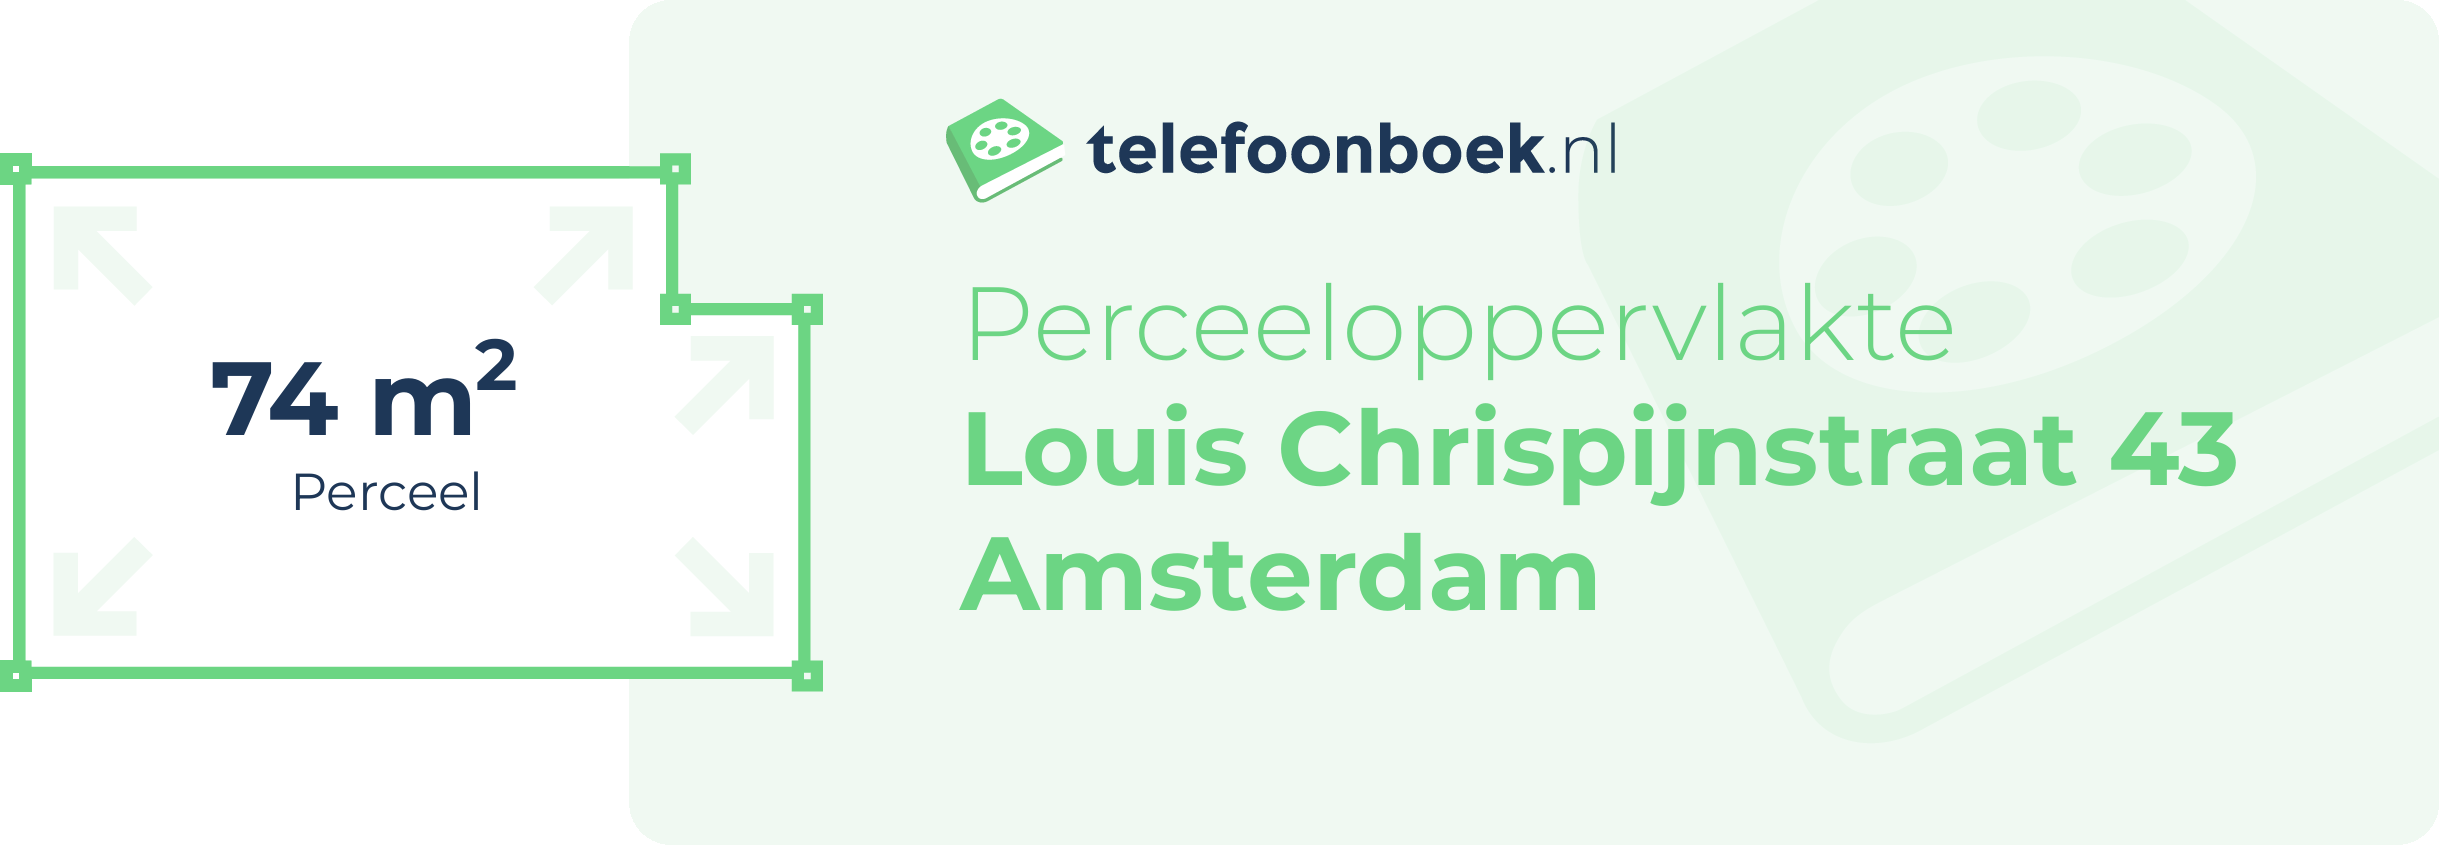 Perceeloppervlakte Louis Chrispijnstraat 43 Amsterdam